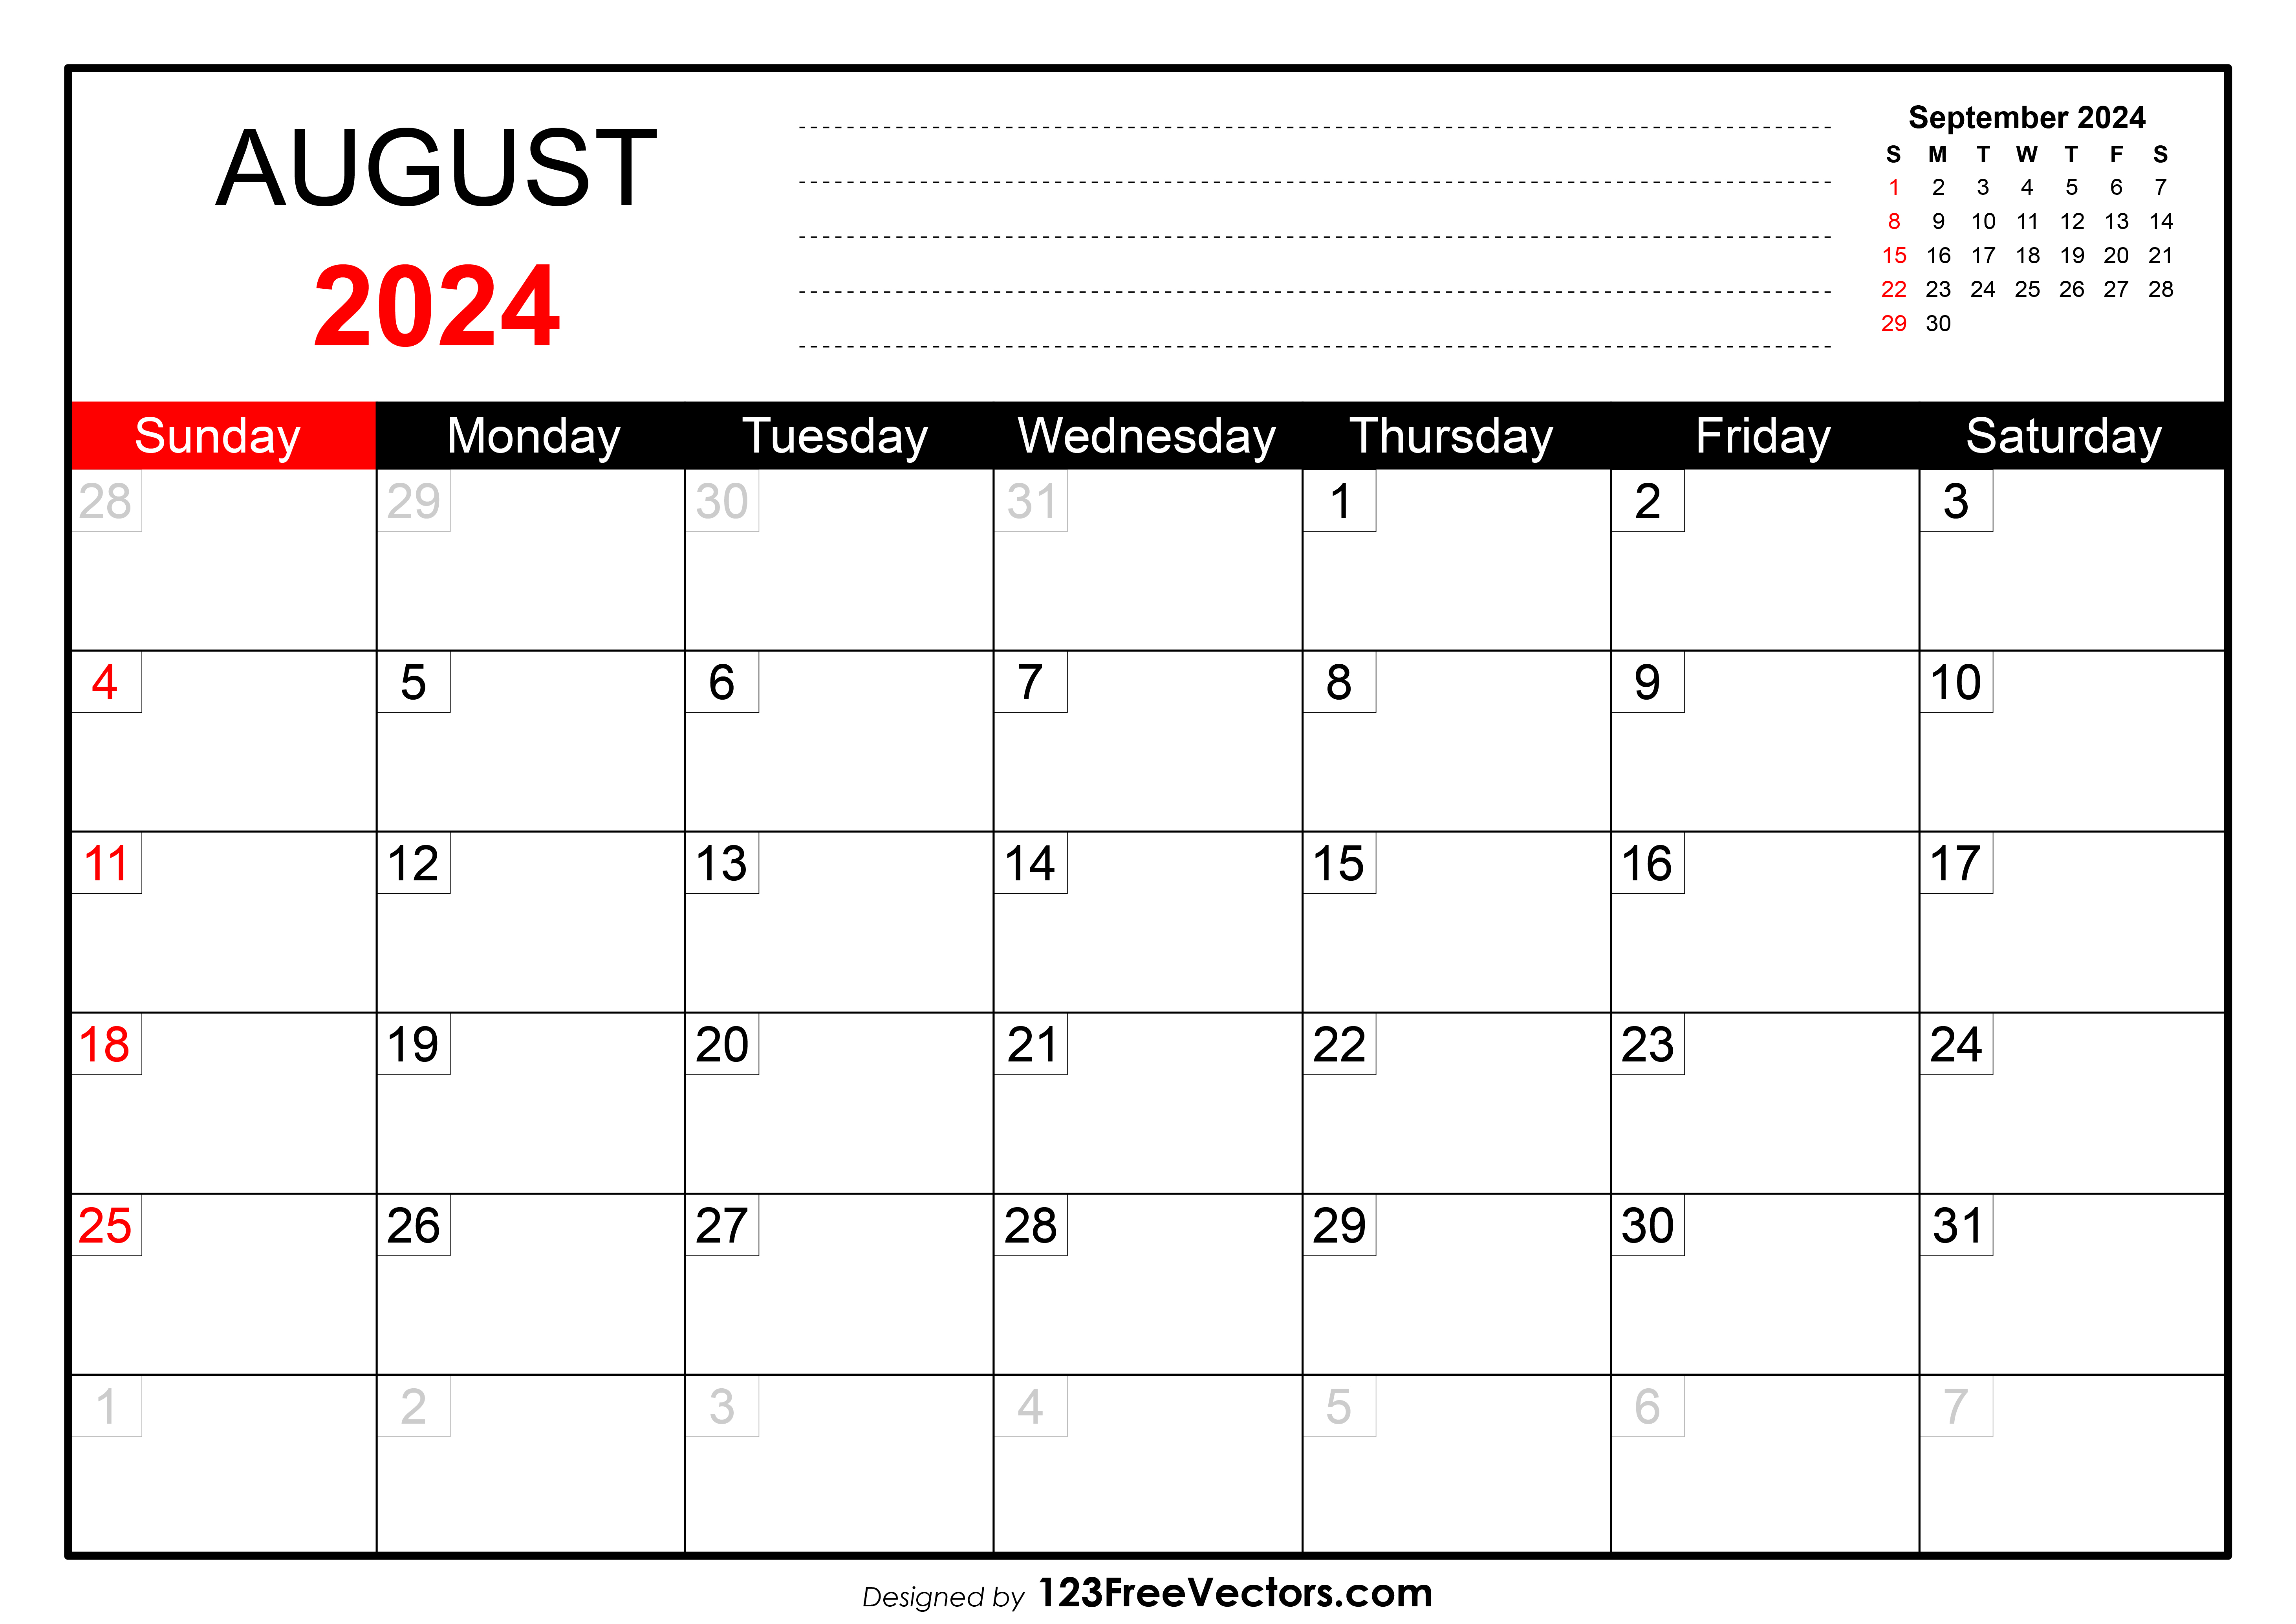 free-august-2024-printable-calendar